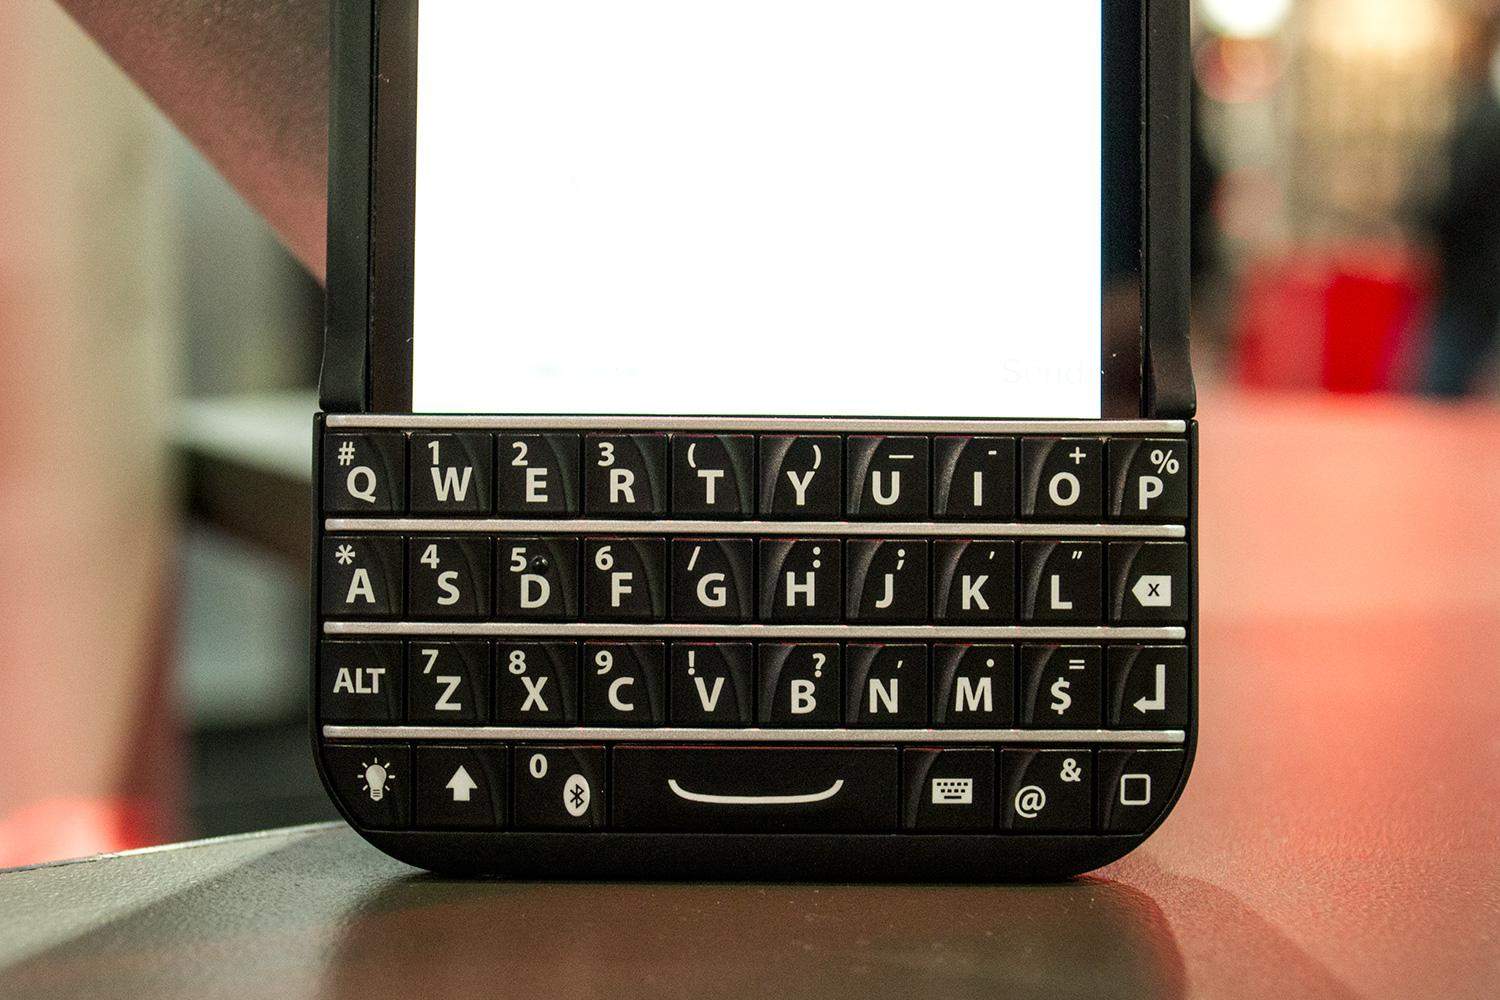 typo-iphone-5-case-review-keyboard-macro-3